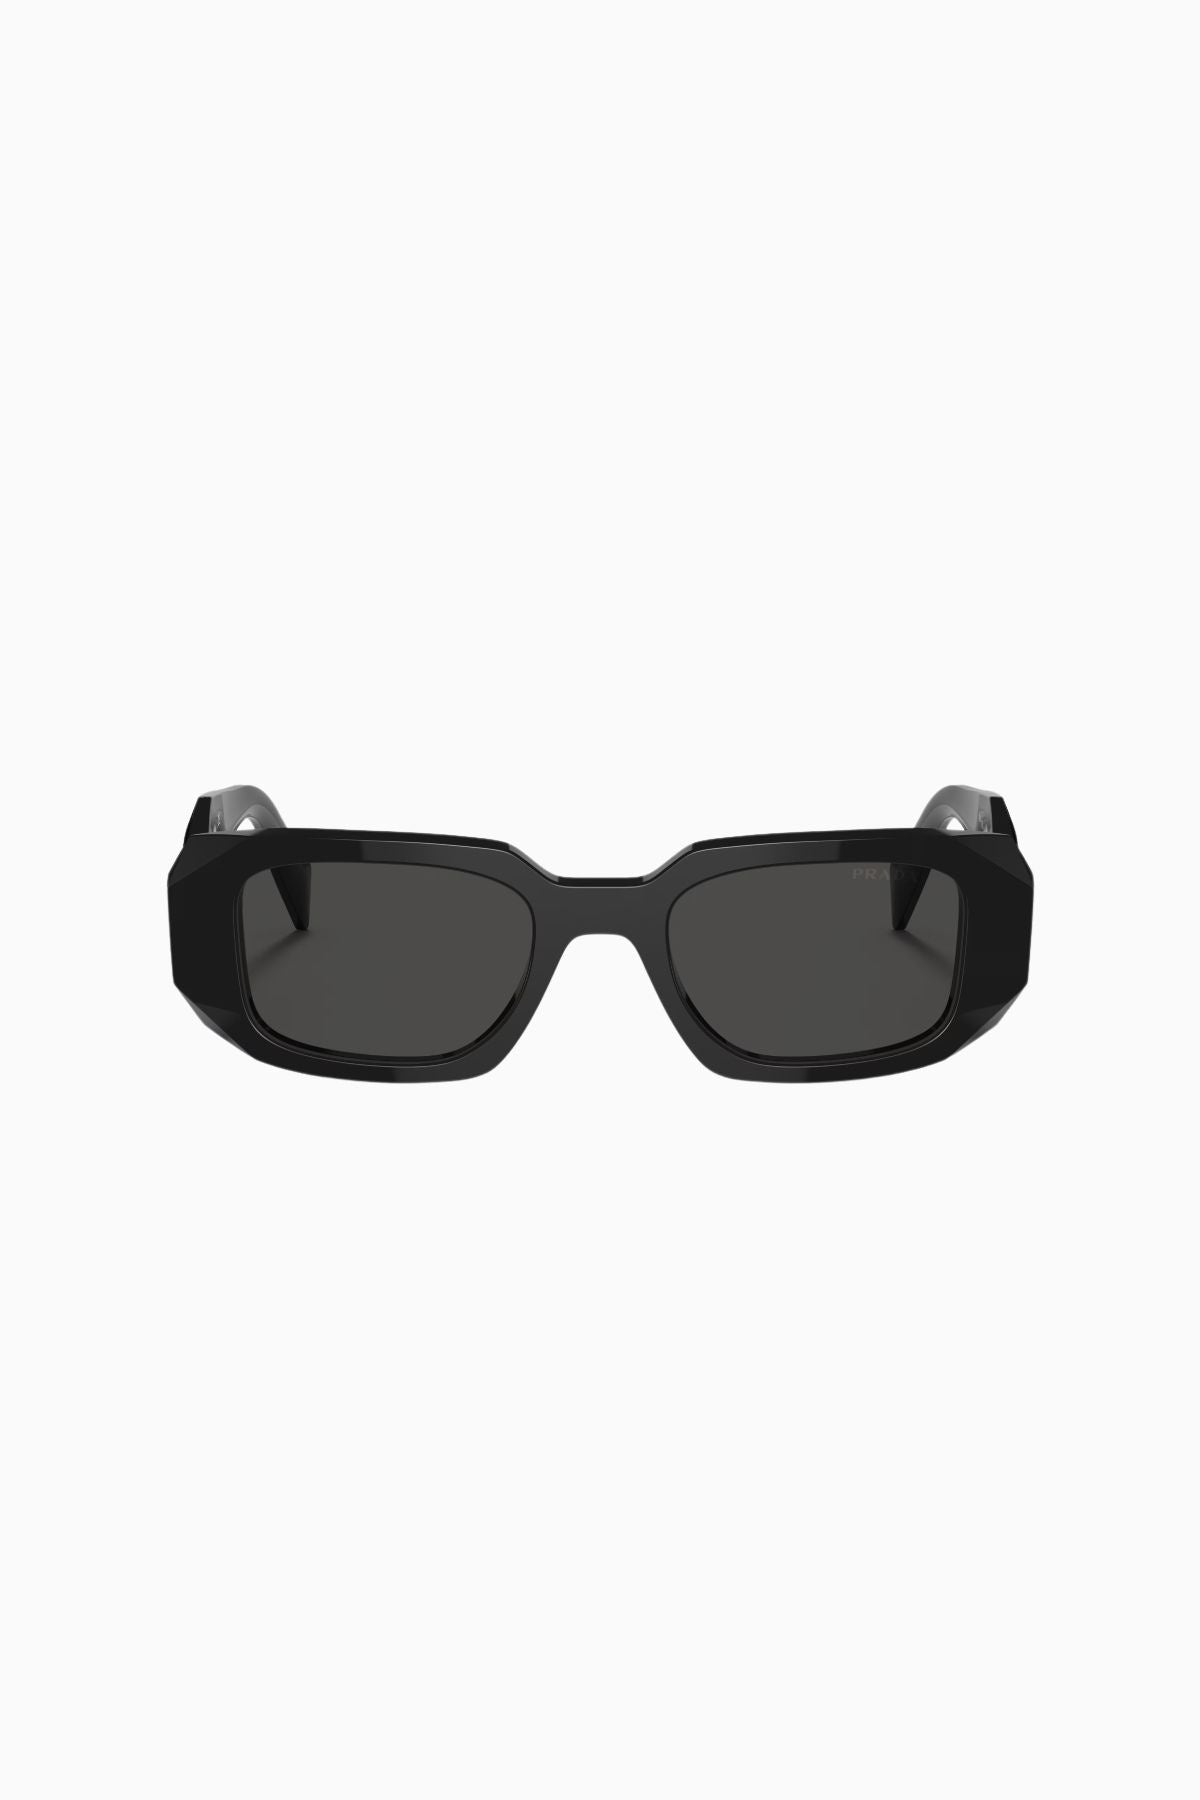 Prada Iconic Rectangle Sunglasses - Black/ Dark Grey